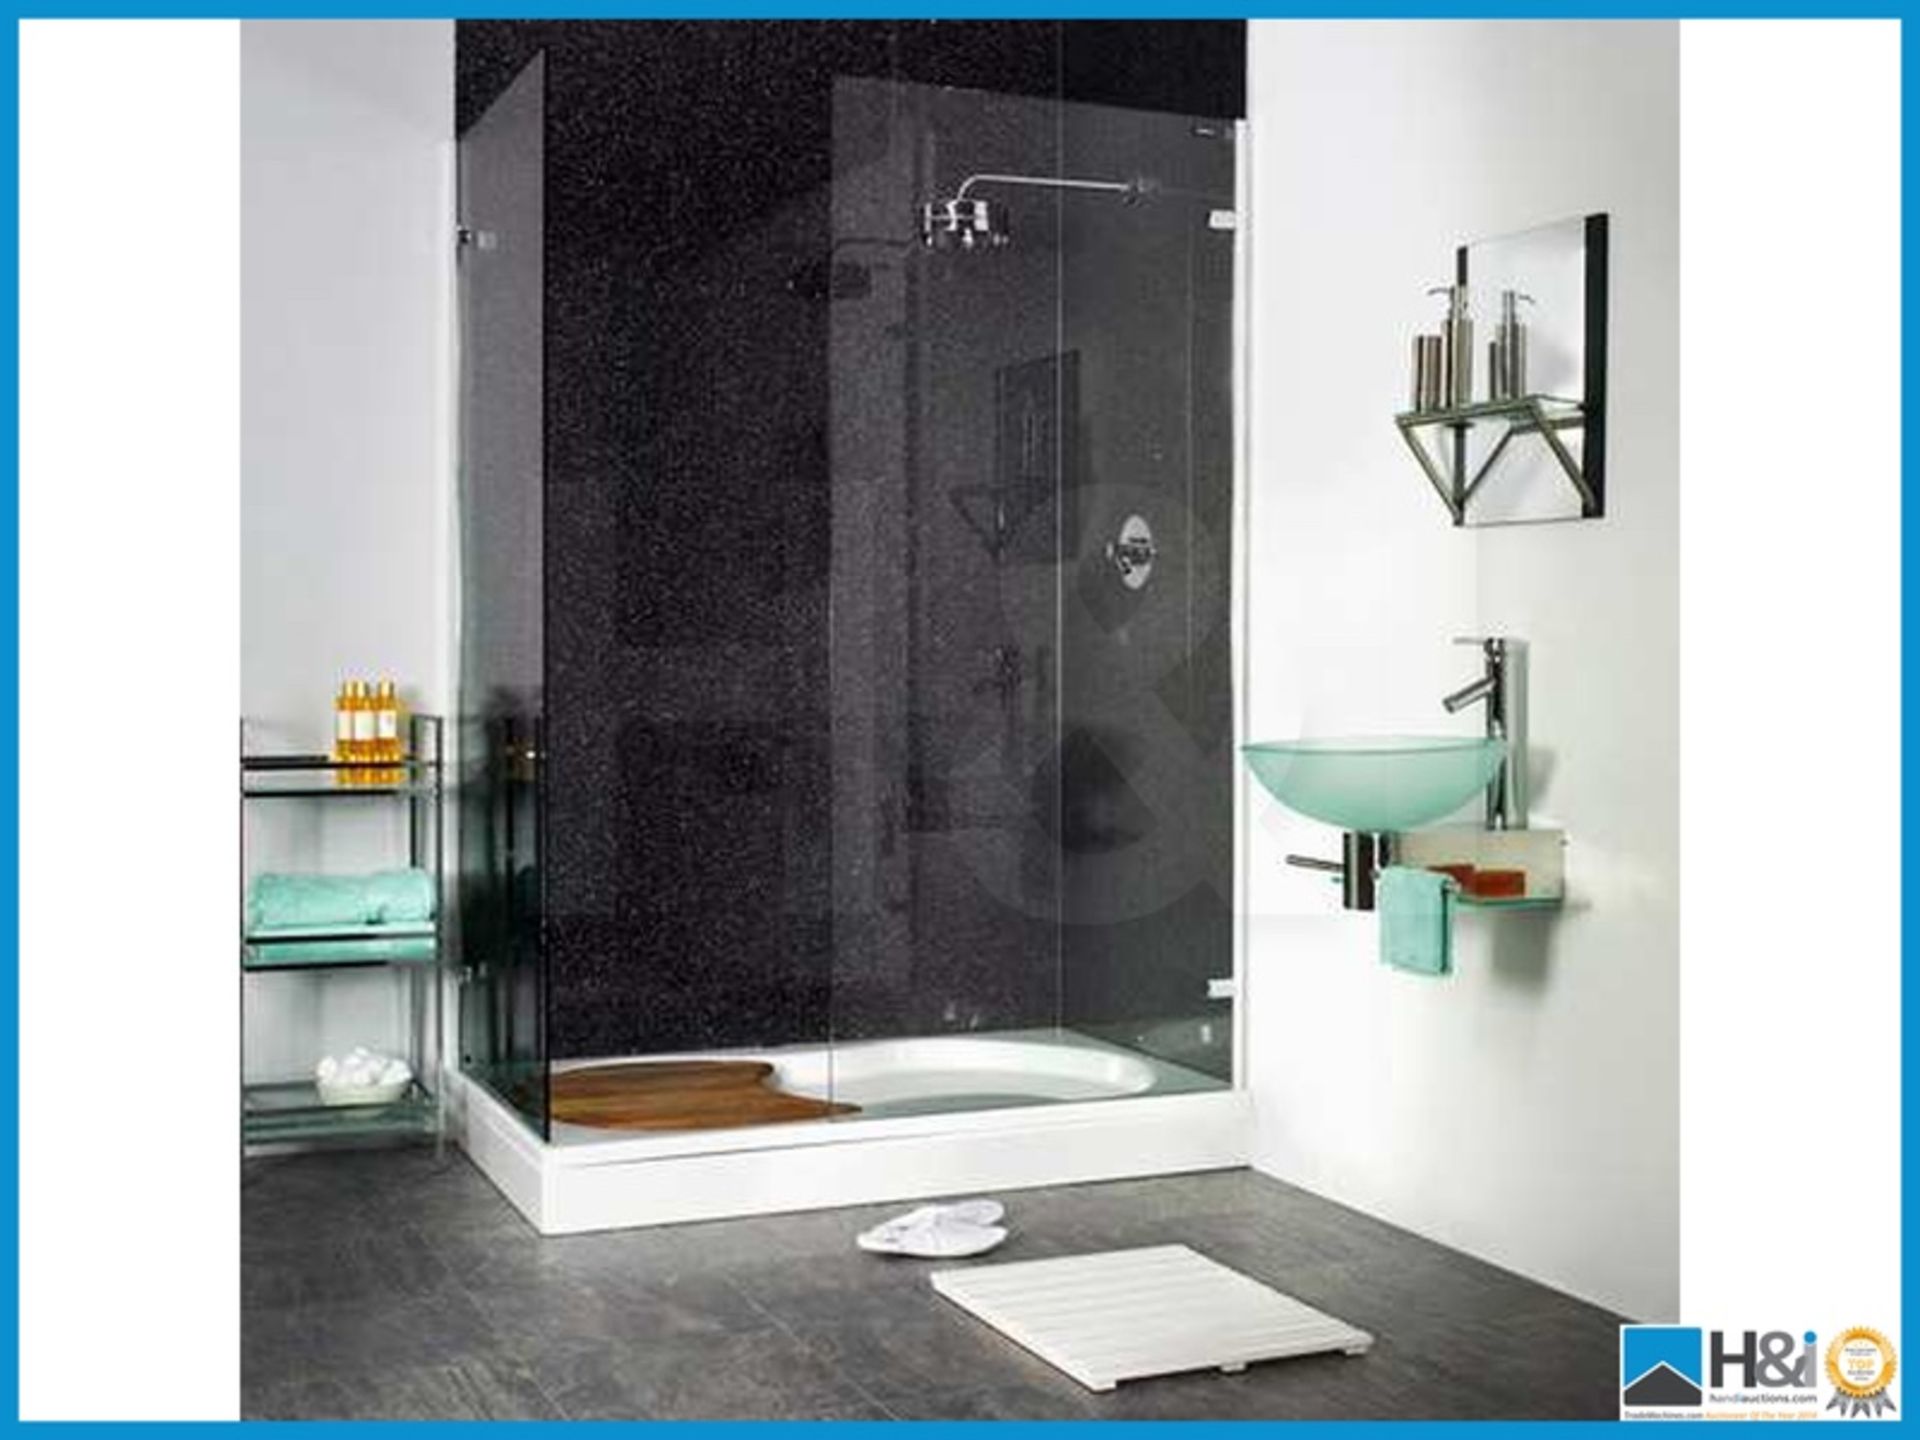 Black Galaxy 1m x 2.4m Wall Panels Modern Bathroom Showerwall Panelling RRP £180. Showerwall is